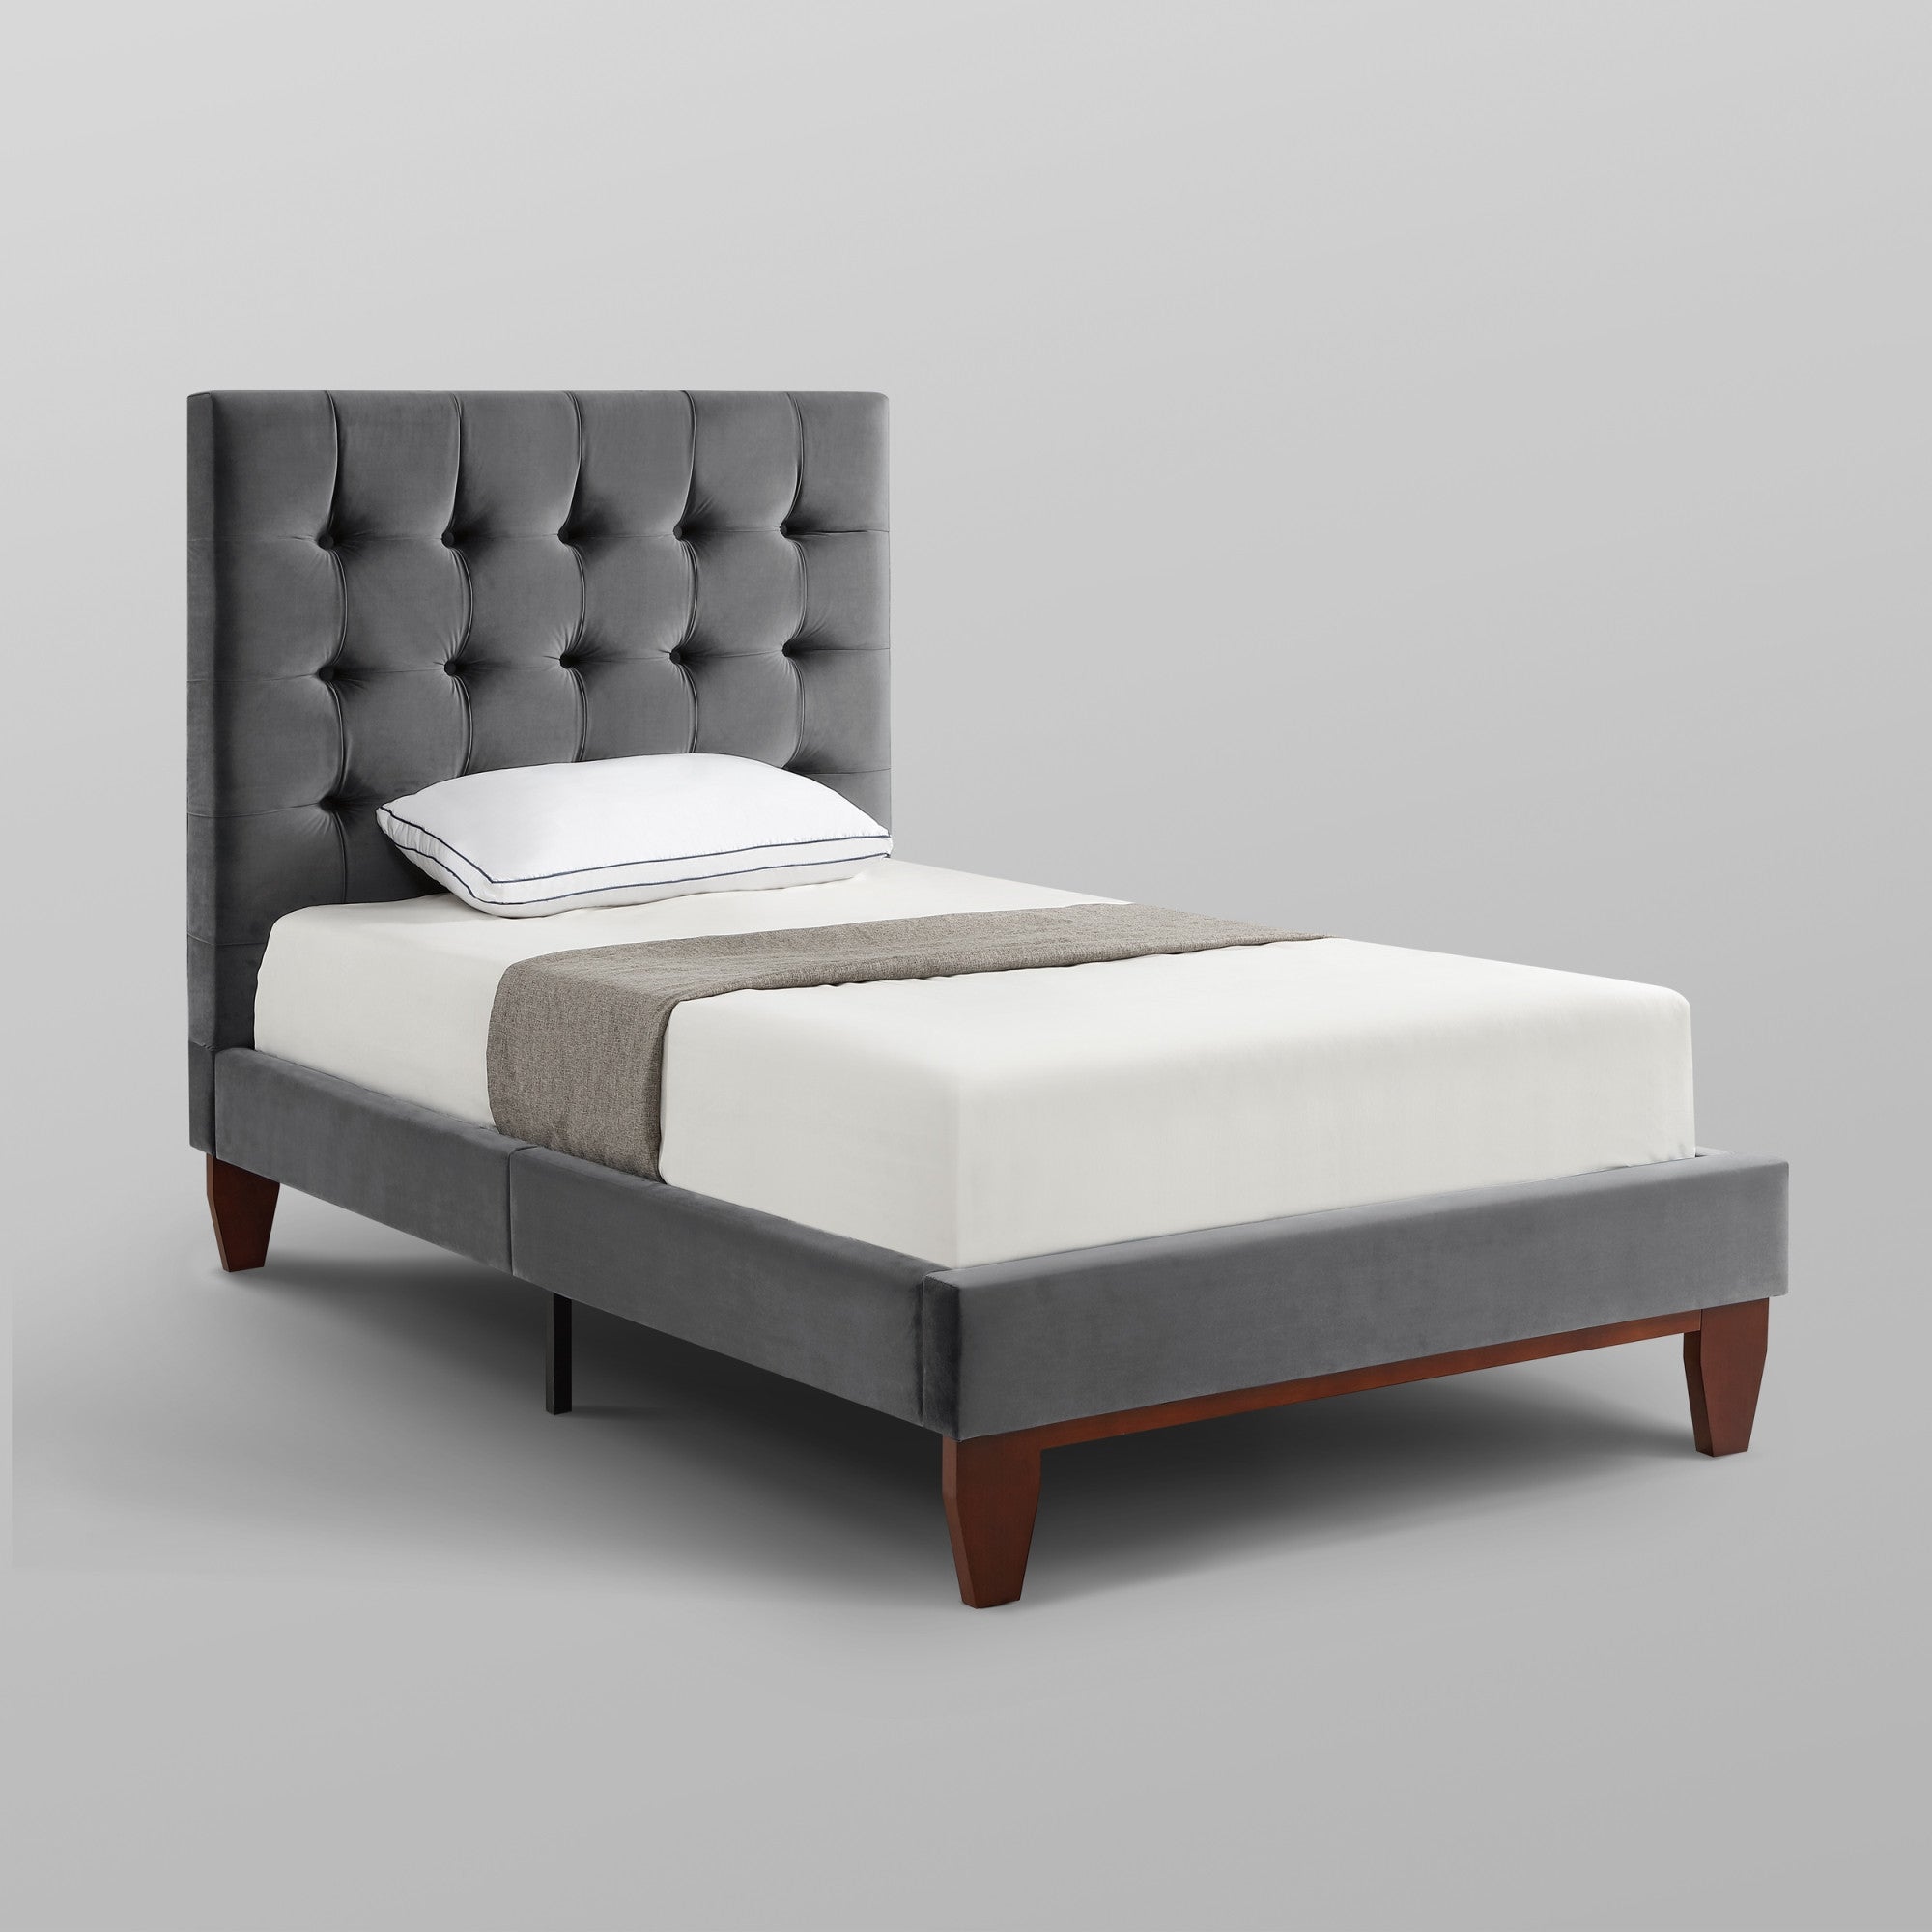 Blush Solid Wood Queen Tufted Upholstered Velvet Bed